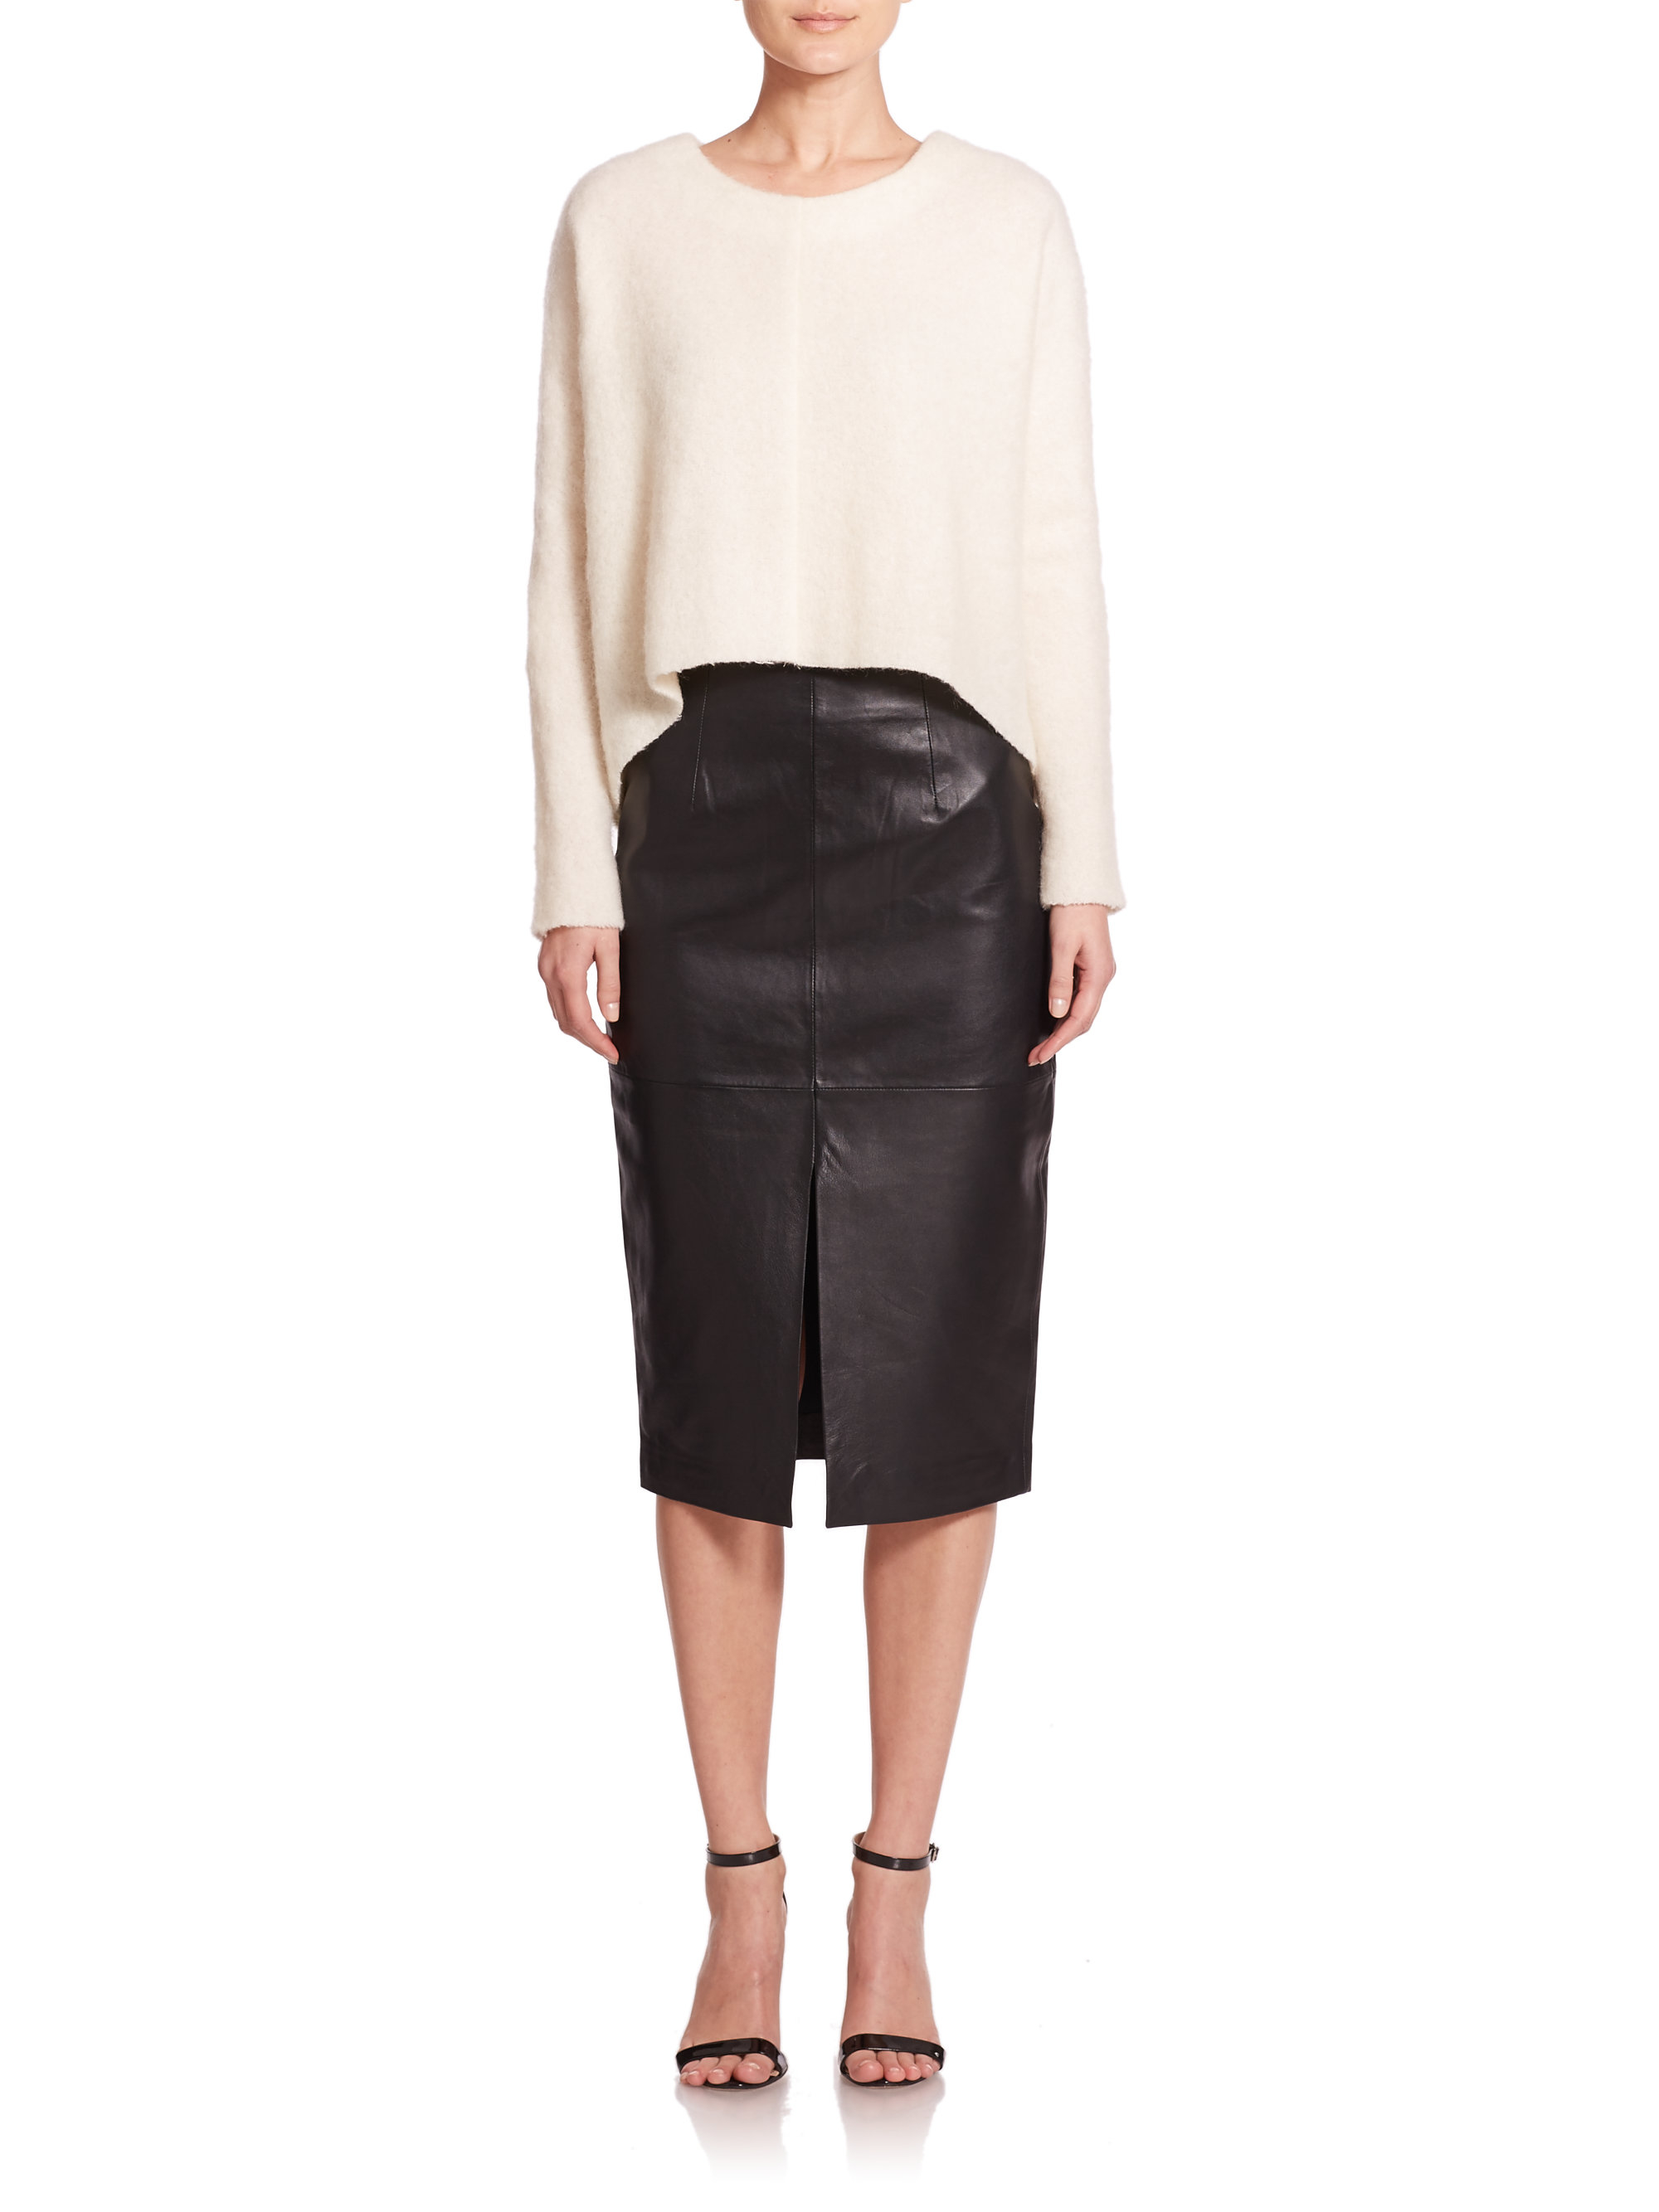 Lyst - Nicholas Leather Slit Pencil Skirt in Black